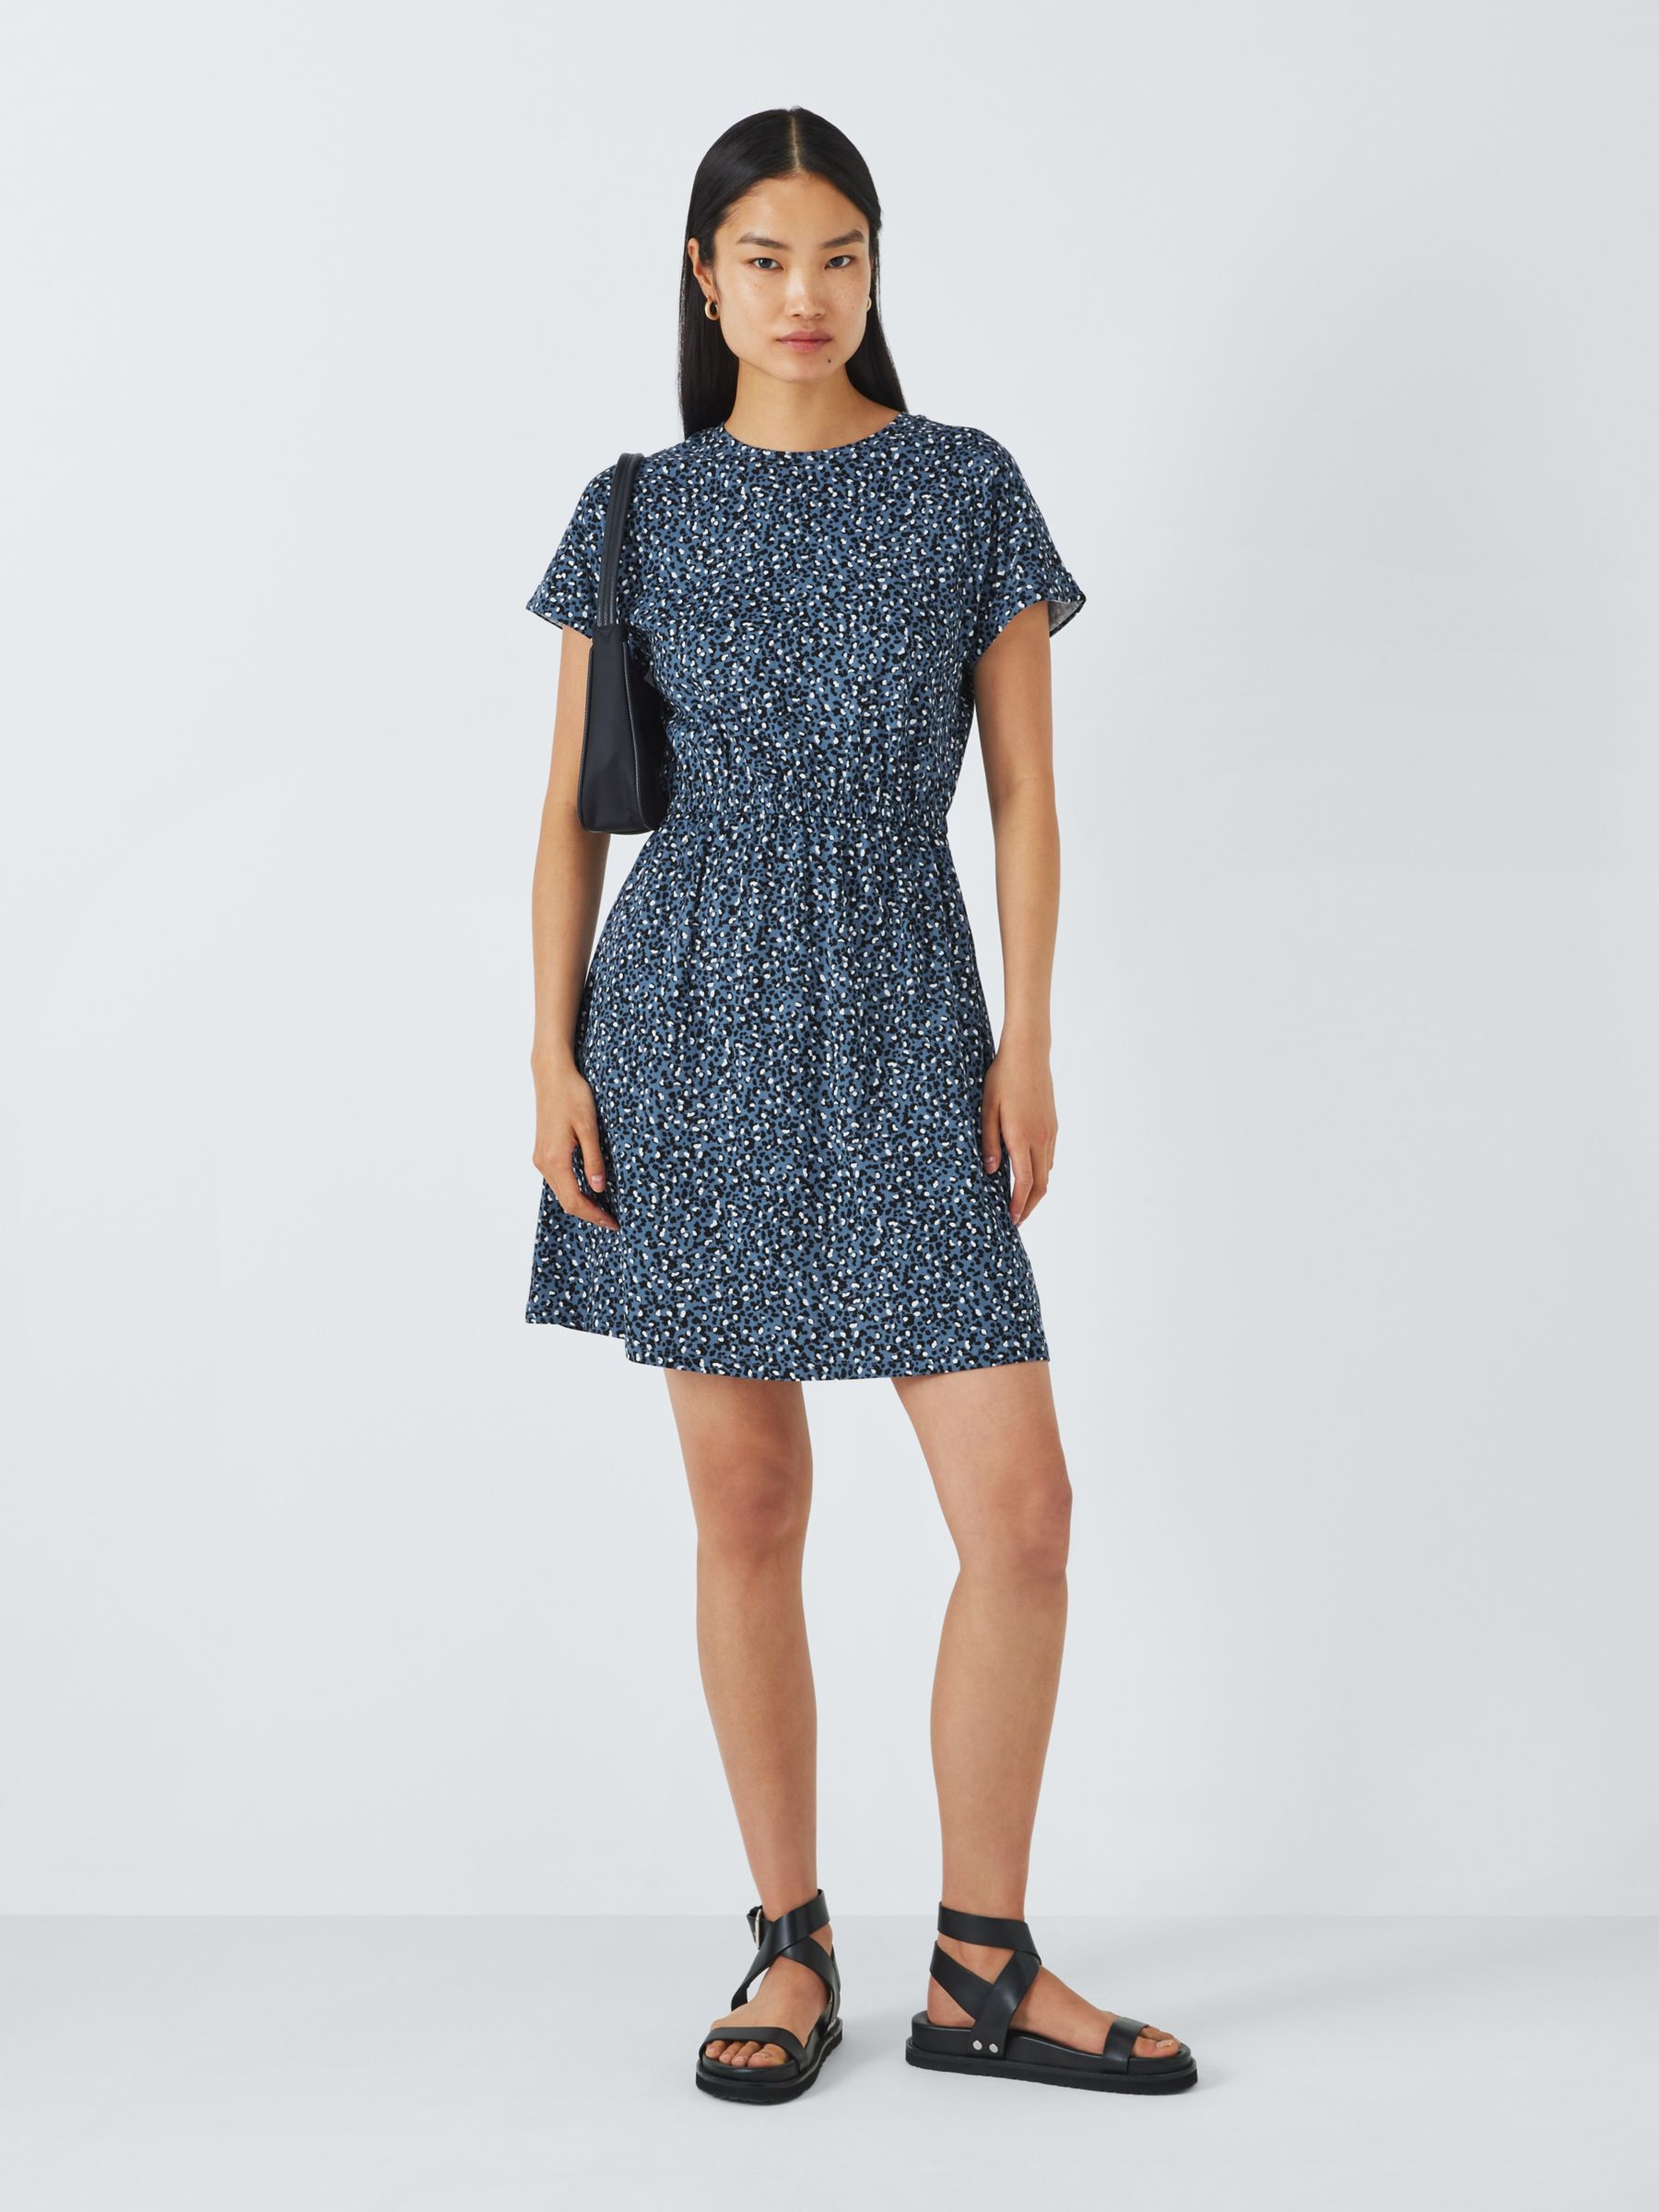 John Lewis ANYDAY Leopard Print Jersey Mini Dress, Blue/Multi, S